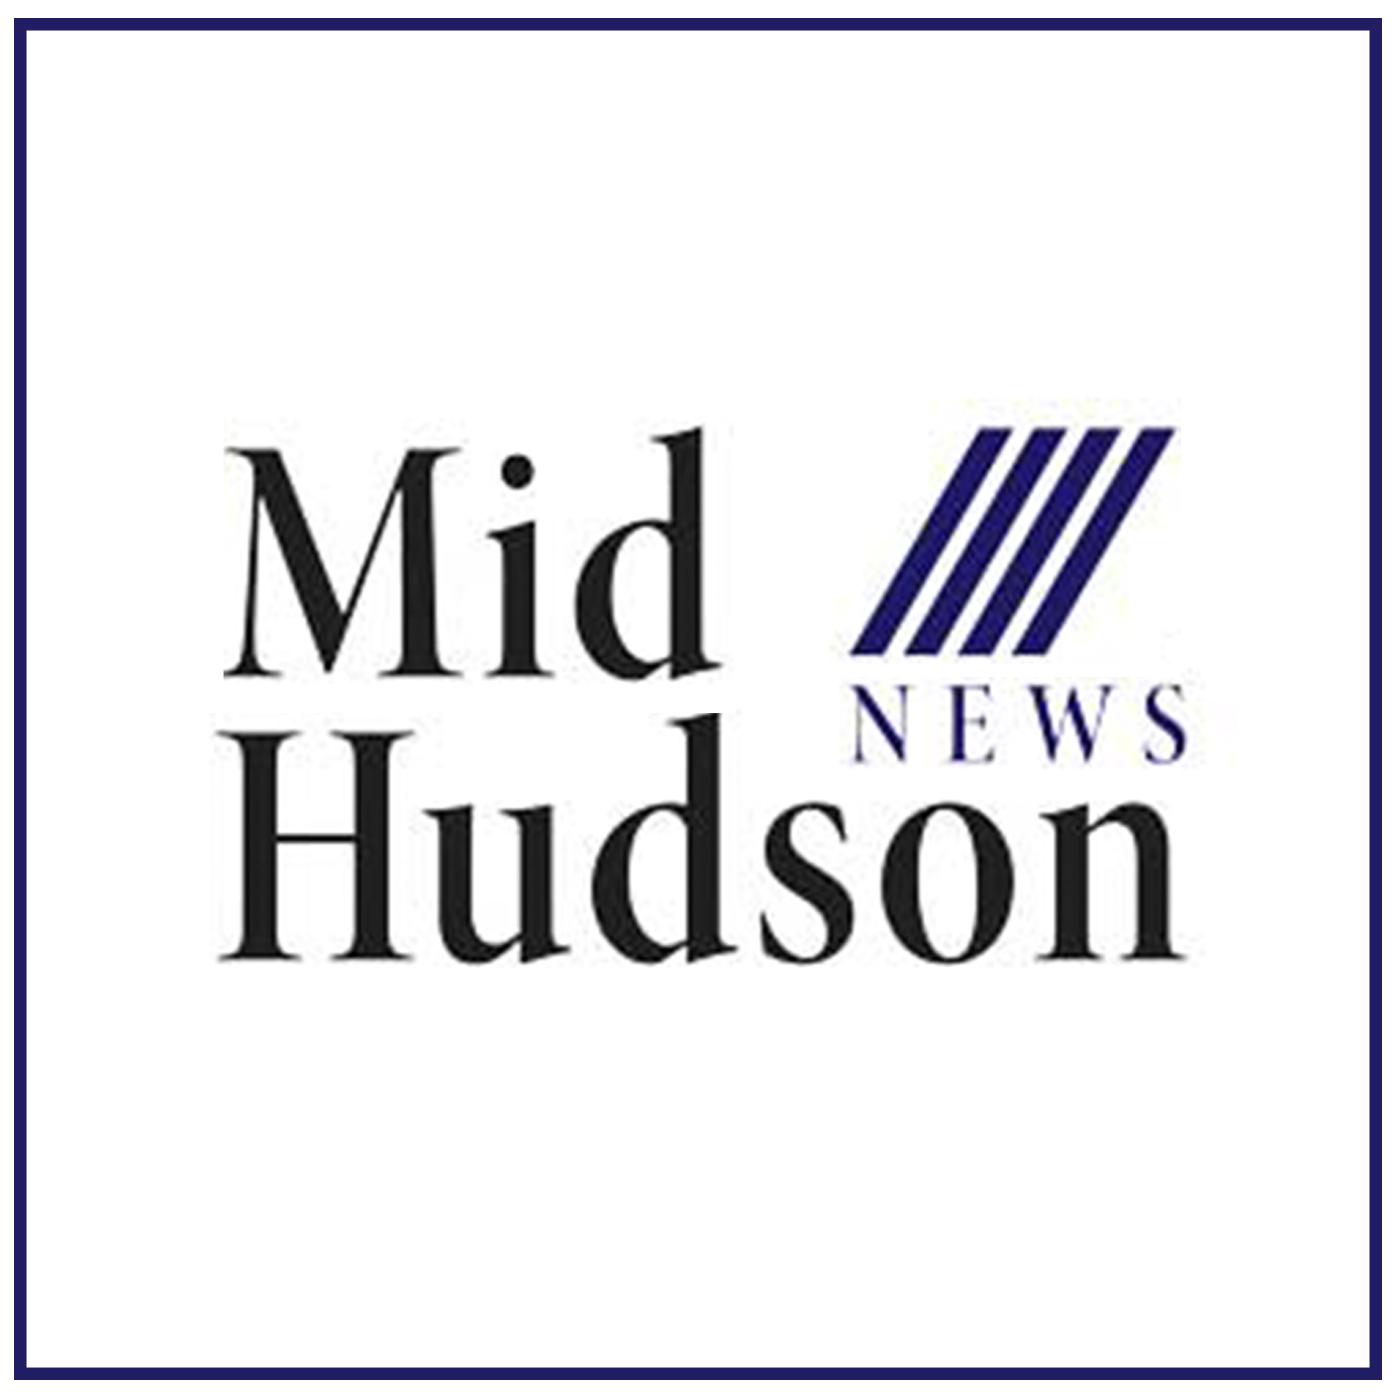 midhudsonnews.com